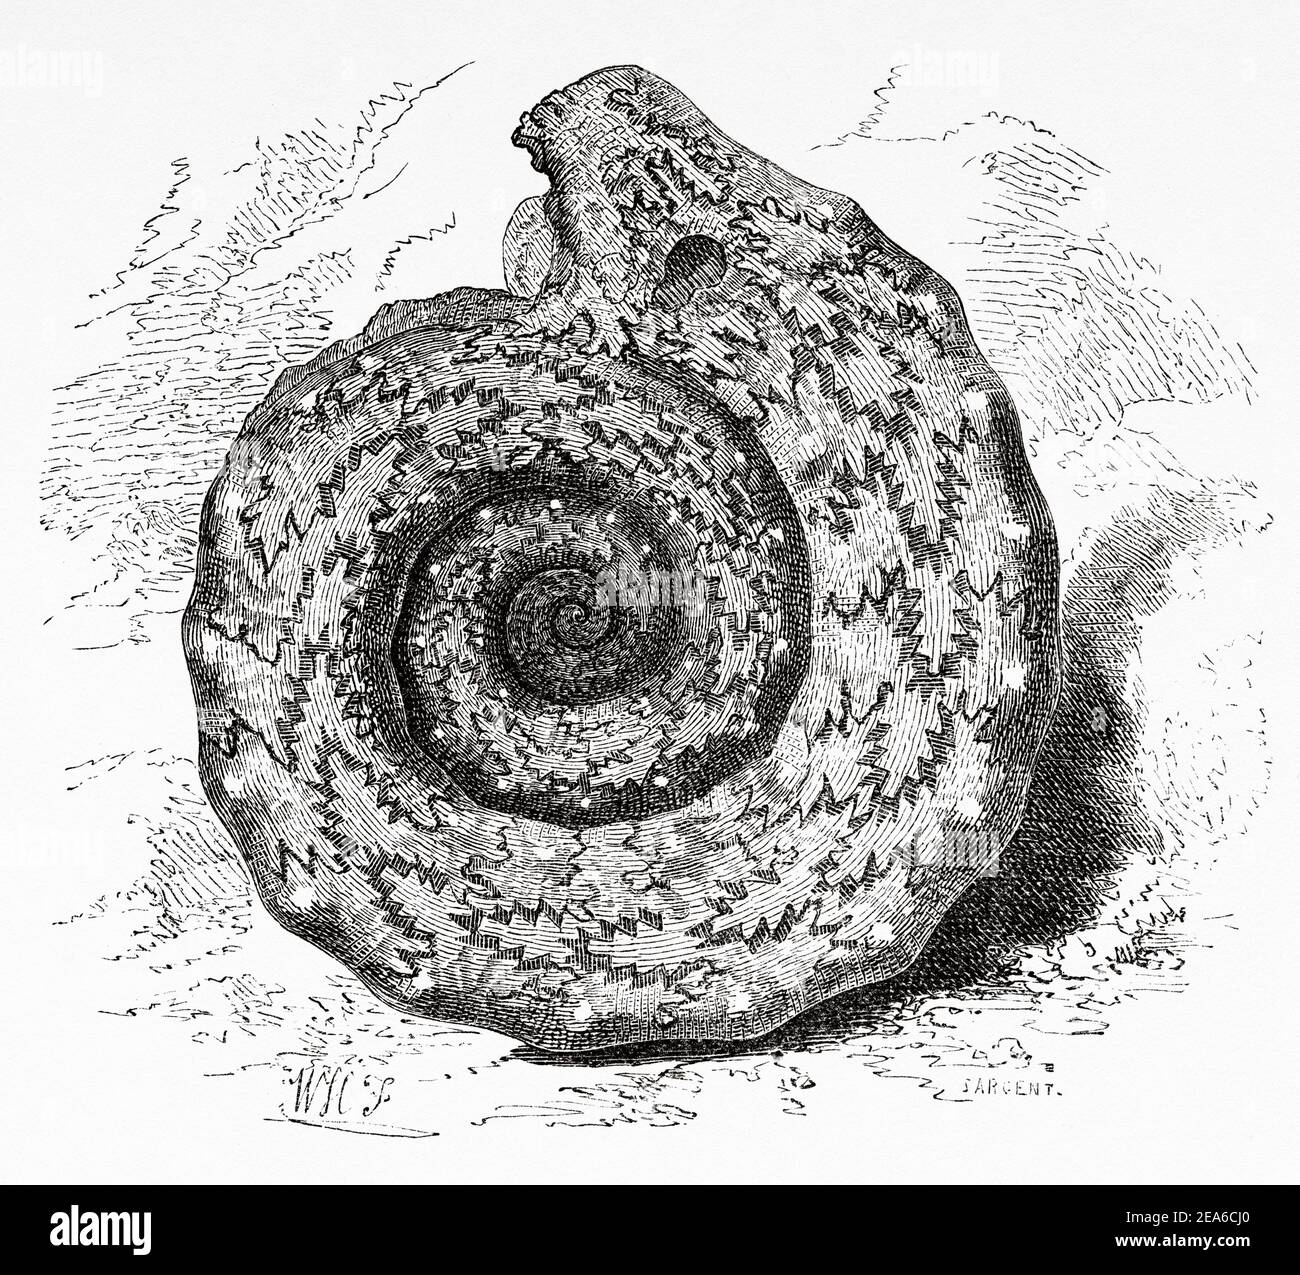 Alte neunzehnten Jahrhundert Illustration. Ammonite Catena. Alte 19th Jahrhundert gravierte Illustration von El Mundo Ilustrado 1879 Stockfoto